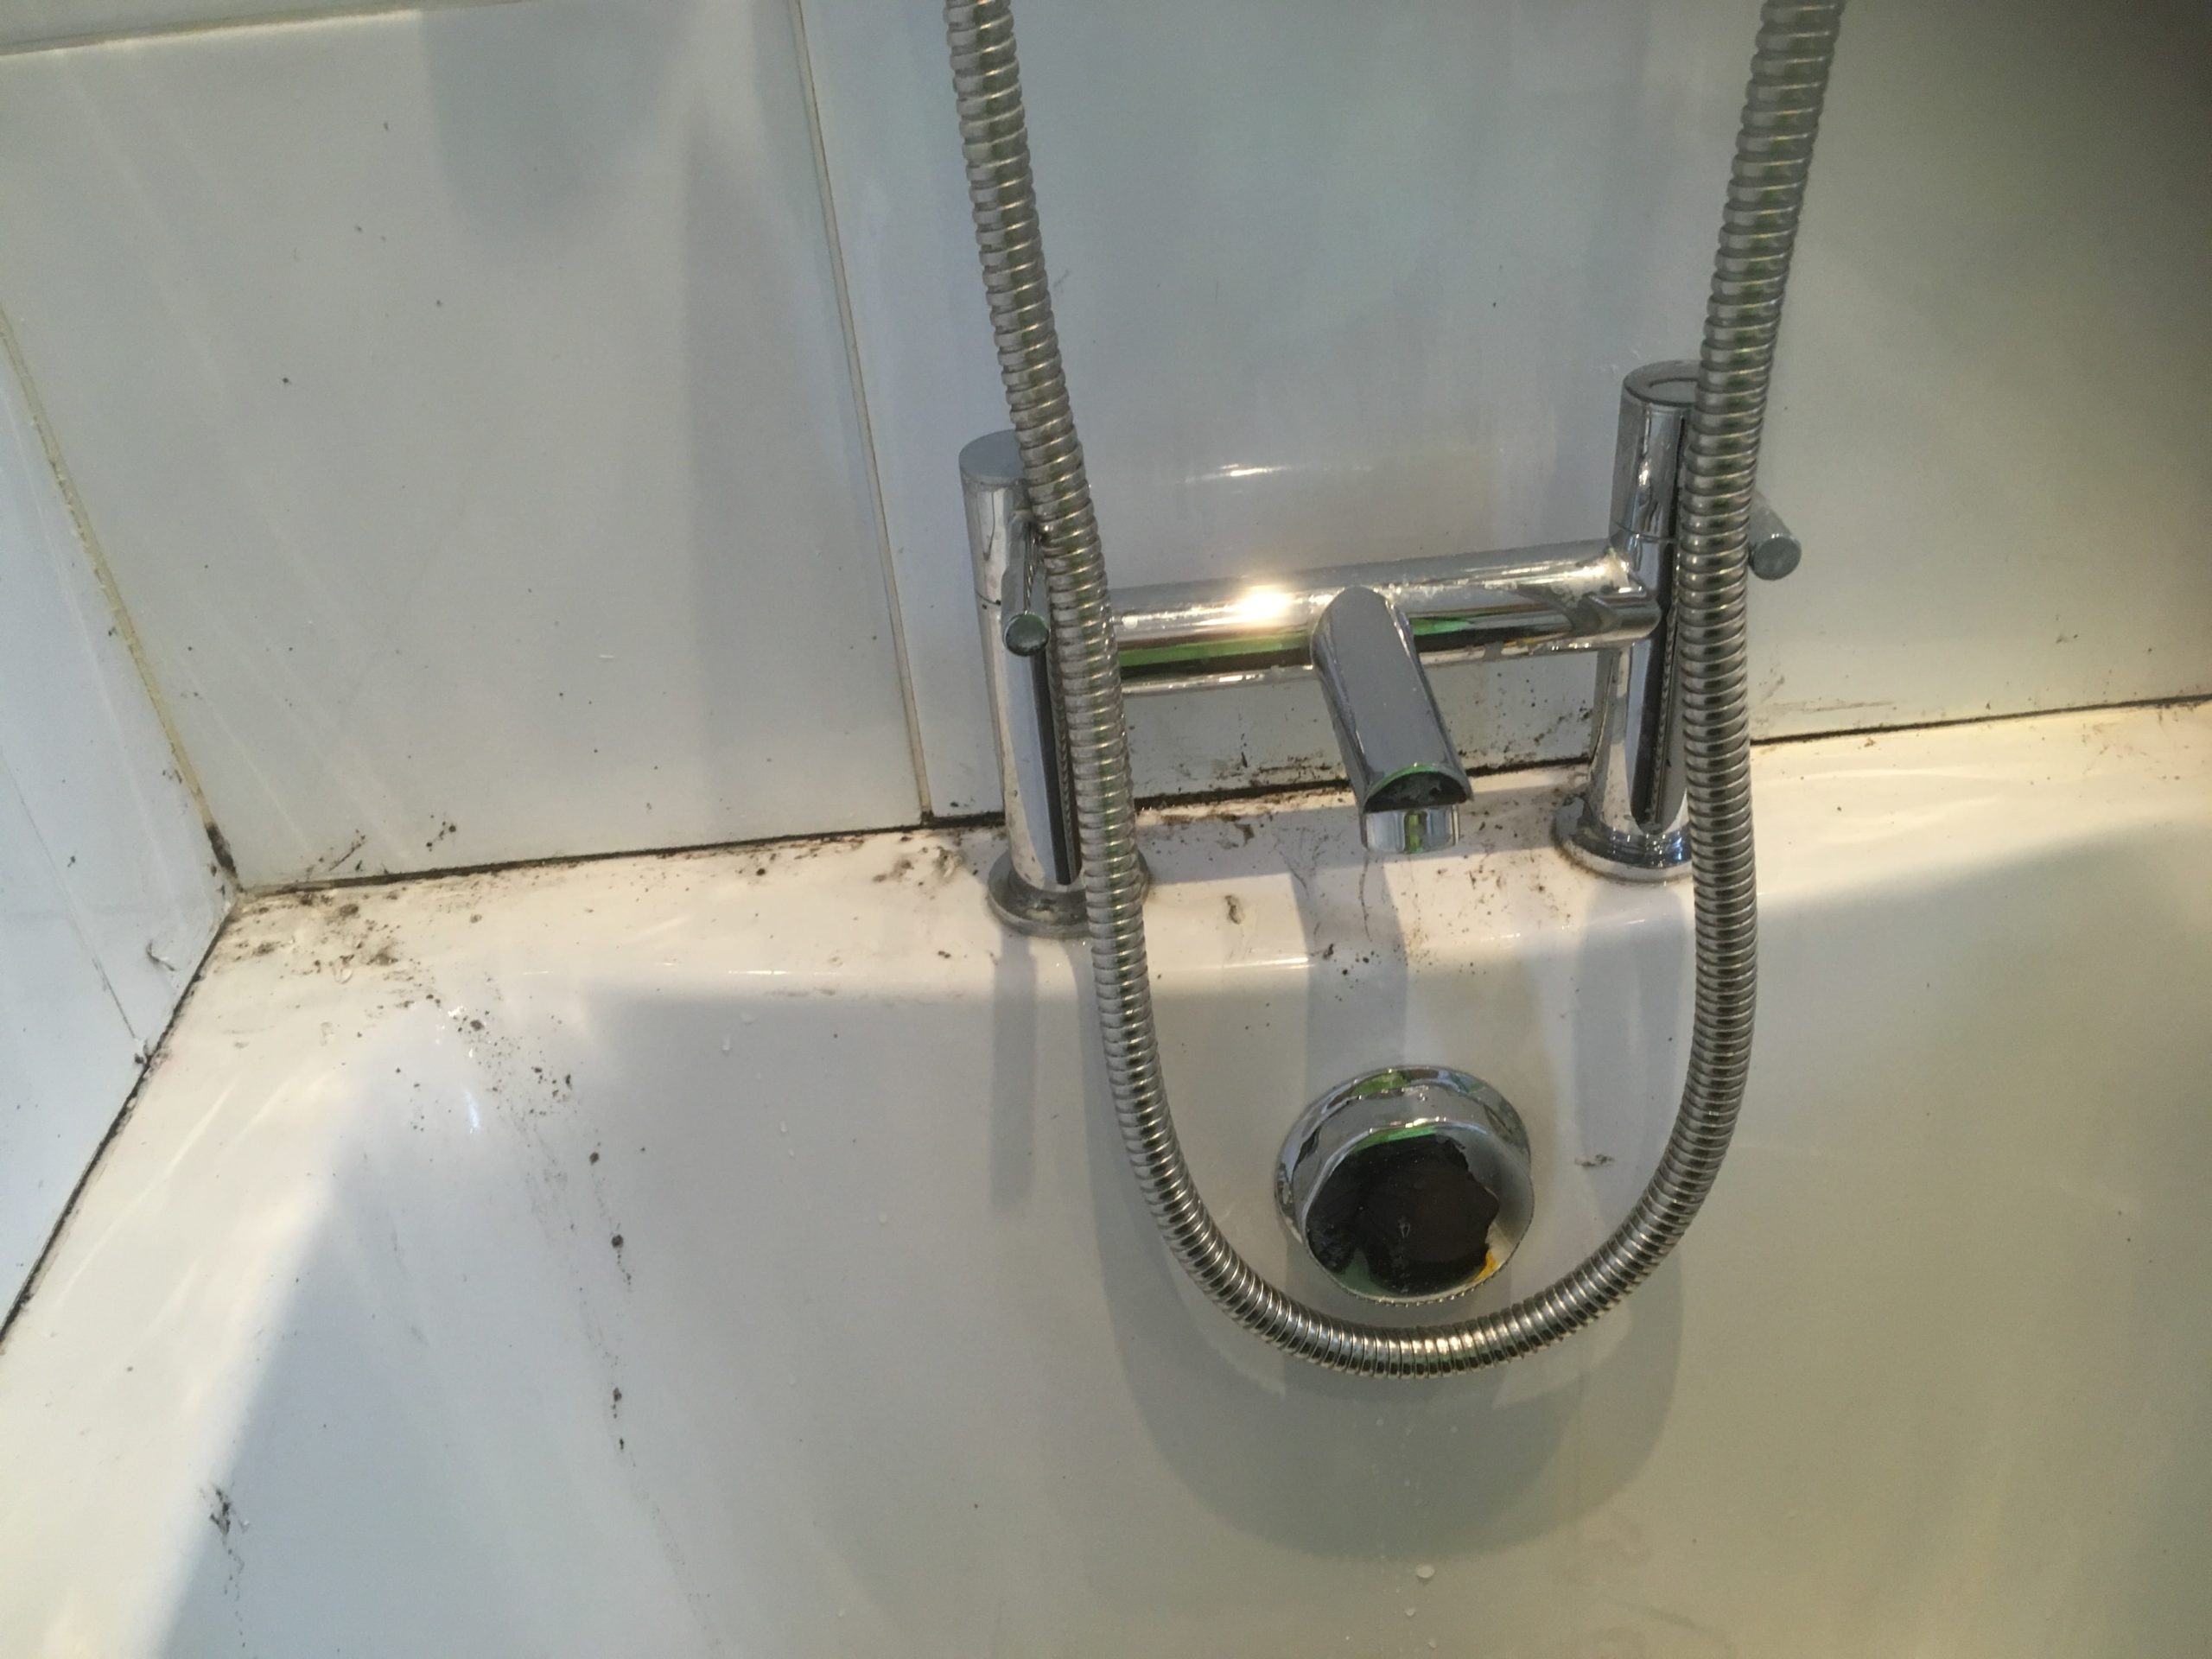 Bathroom Shower Tile During Cleaning Handforth